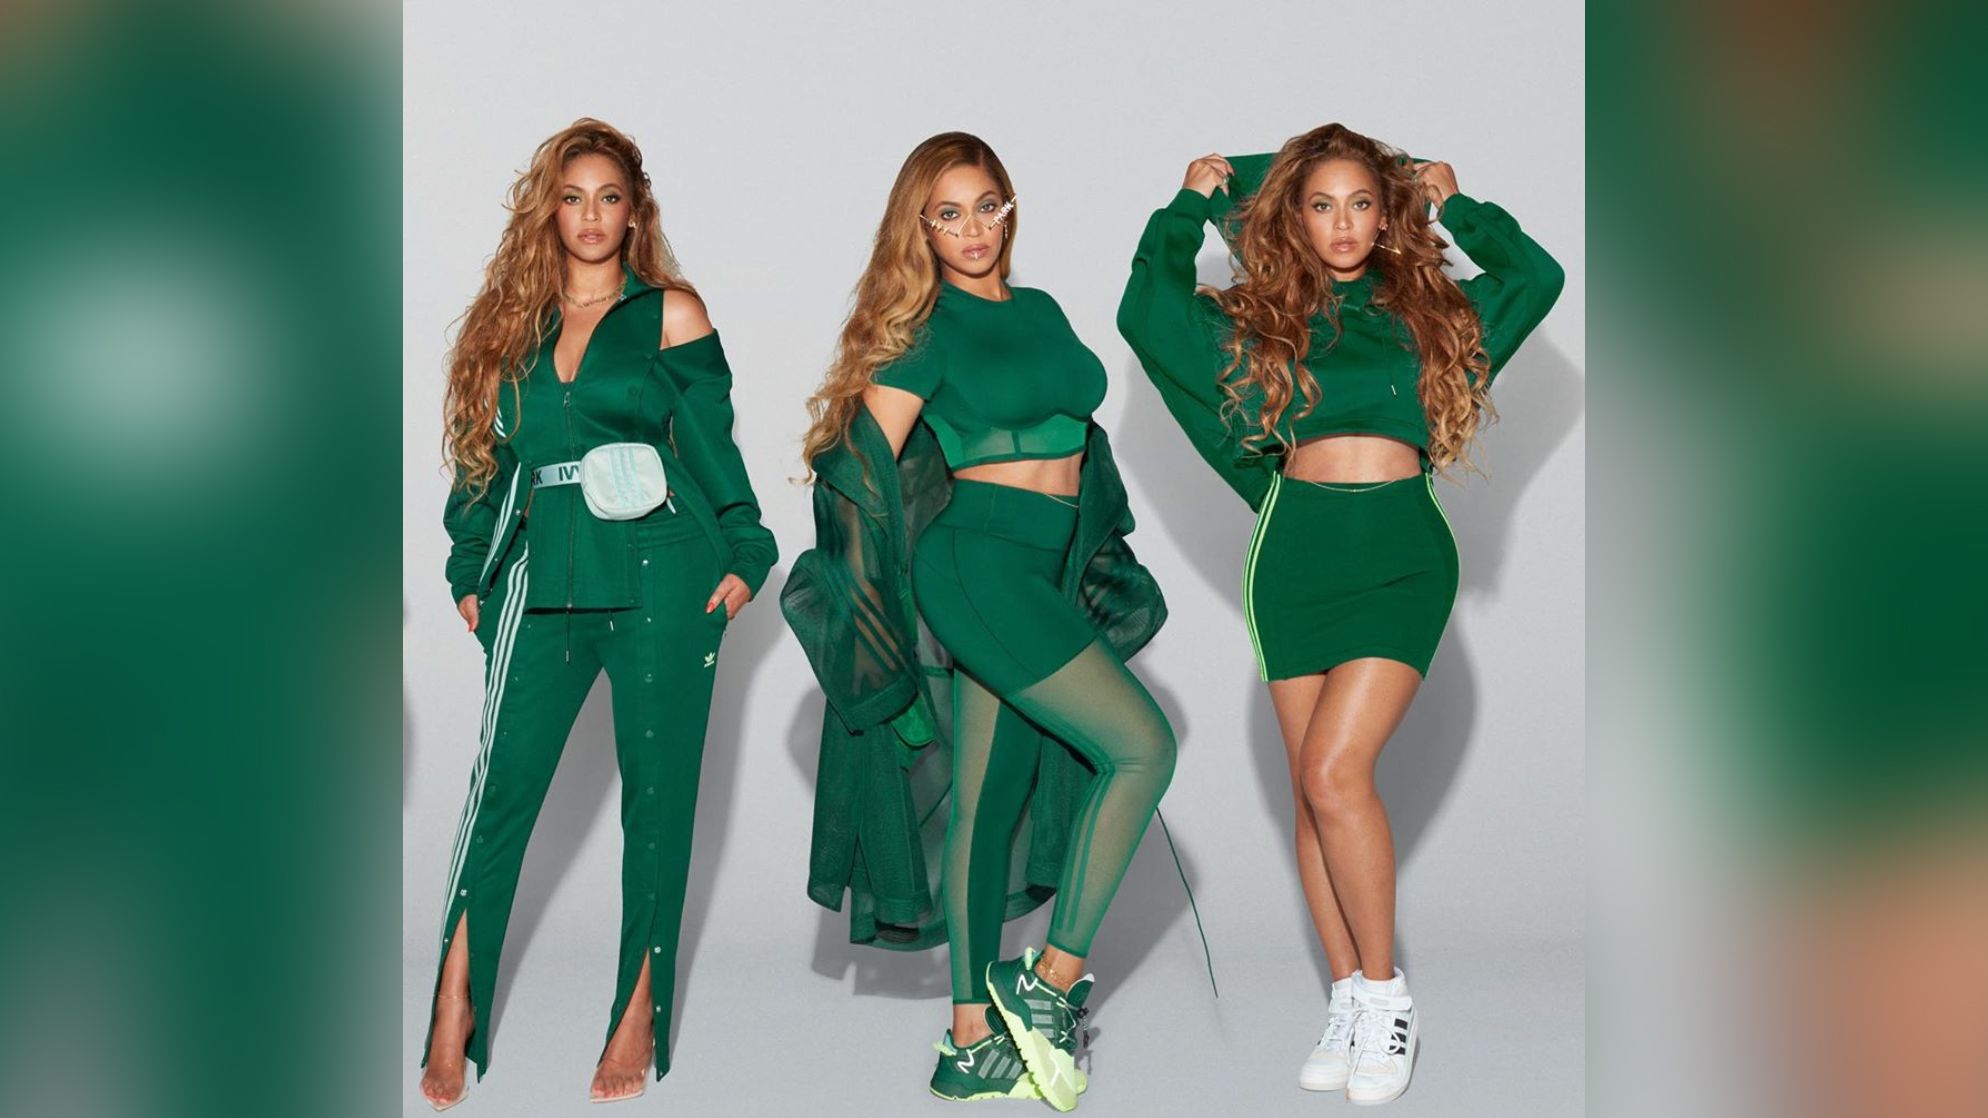 Circunferencia confirmar Proporcional Beyoncé's latest Ivy Park x Adidas gear finally drops online | CNN Business